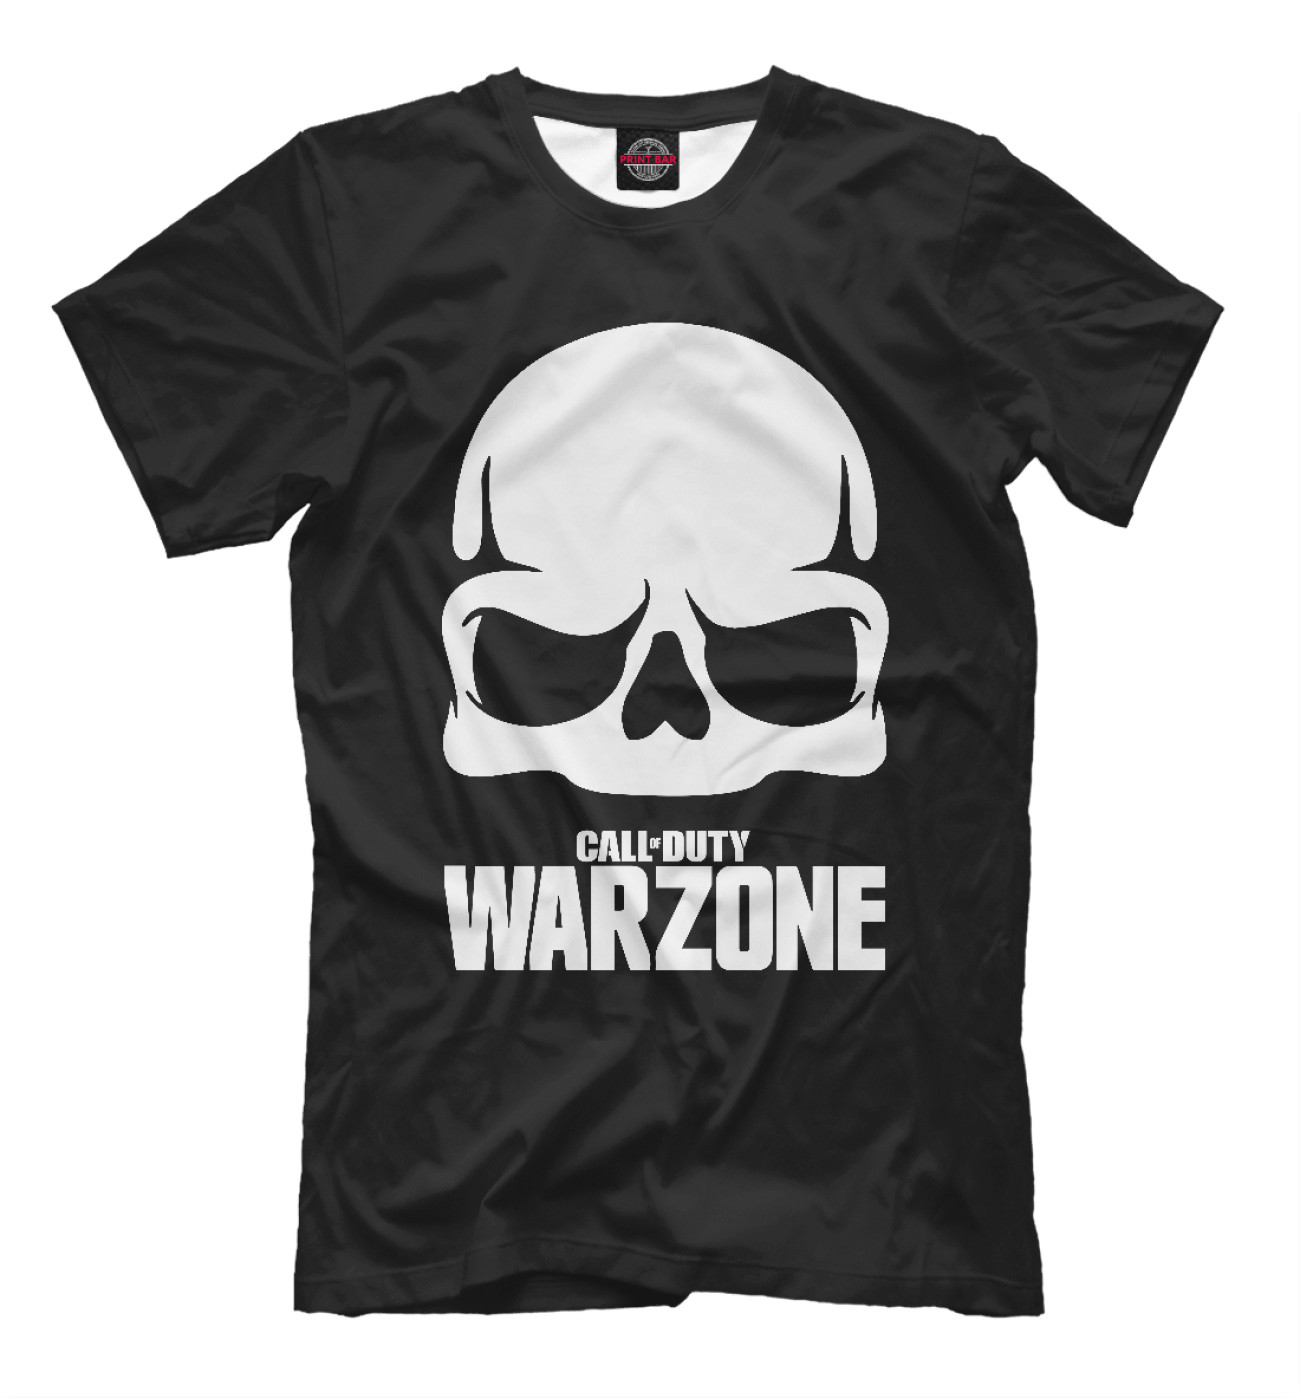 Мужская Футболка Call of Duty Warzone, артикул: COD-438147-fut-2